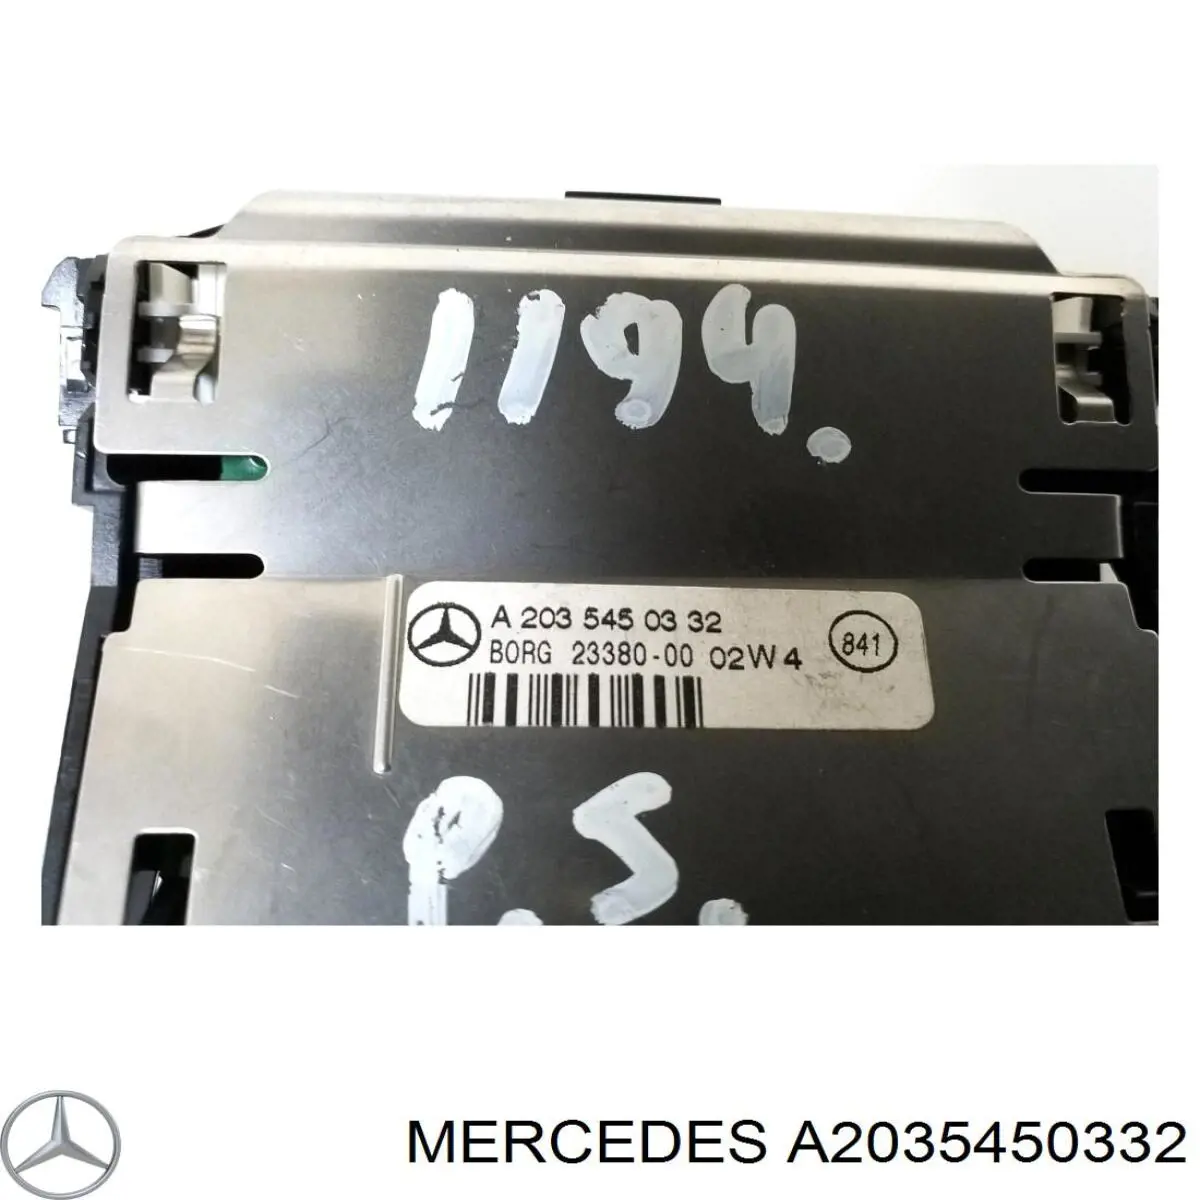 A2035450332 Mercedes